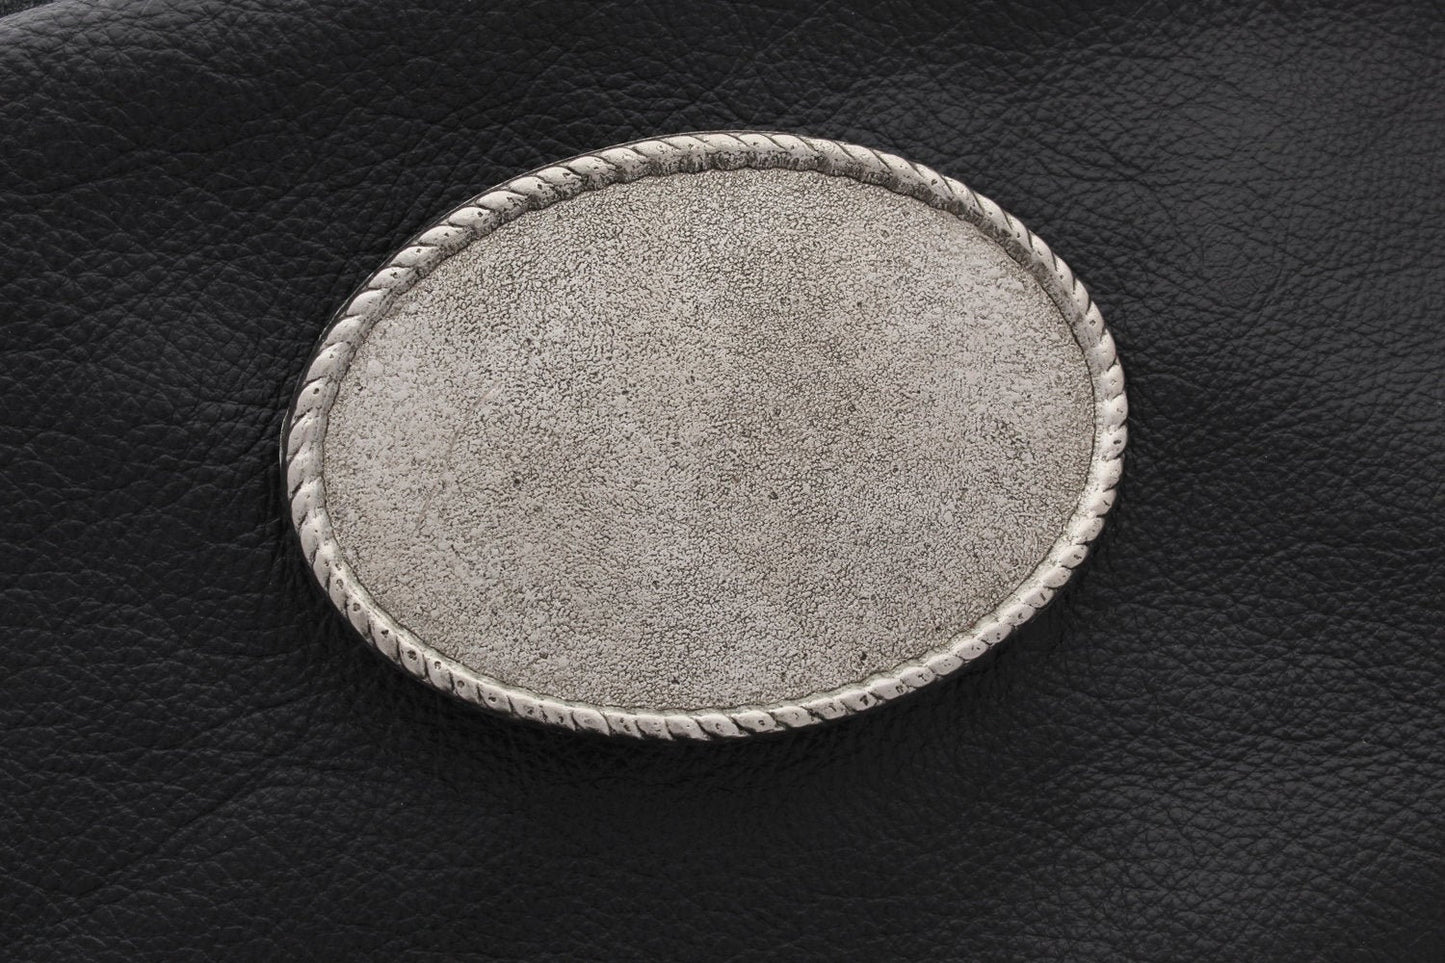 Belt buckle base for embellishment, antique silver finish, 3.5", Each